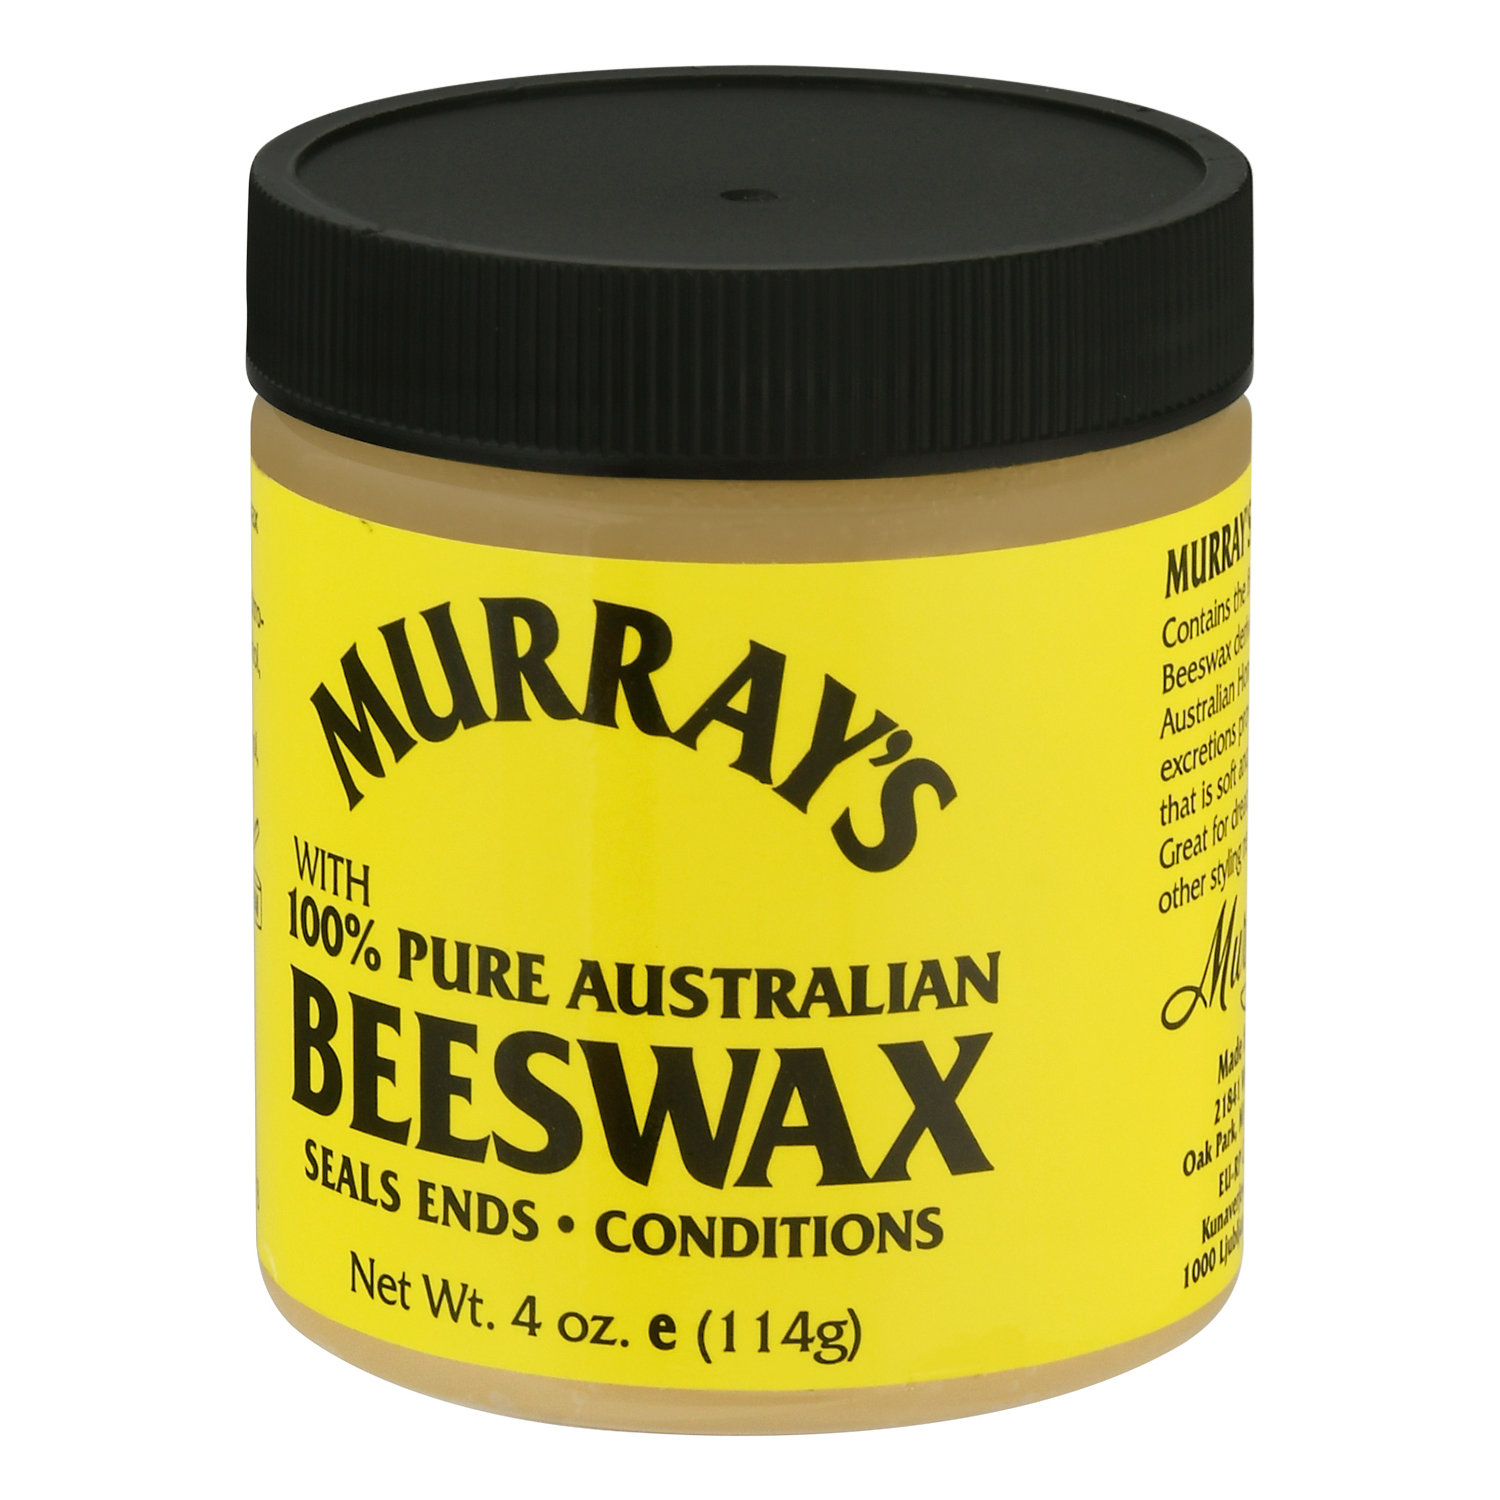 Murray's Black Beeswax with 100% Pure Australian Beeswax 4 oz.